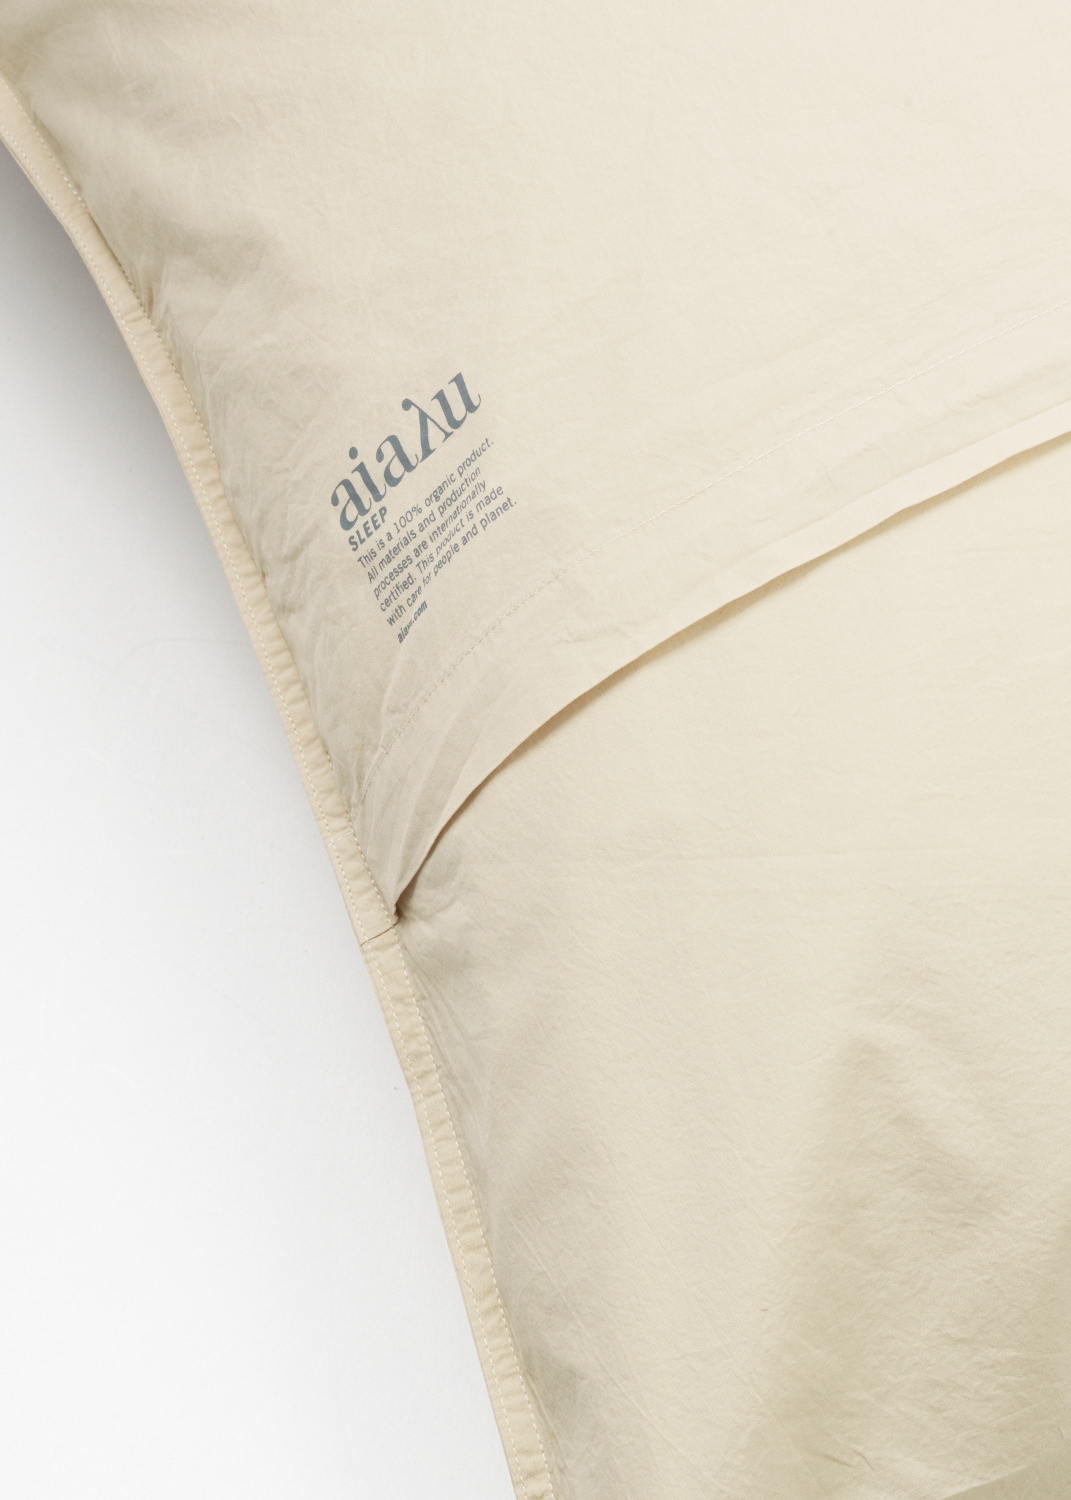 Bedlinen - Duvet Set - Single (140x200 + pillow case) 